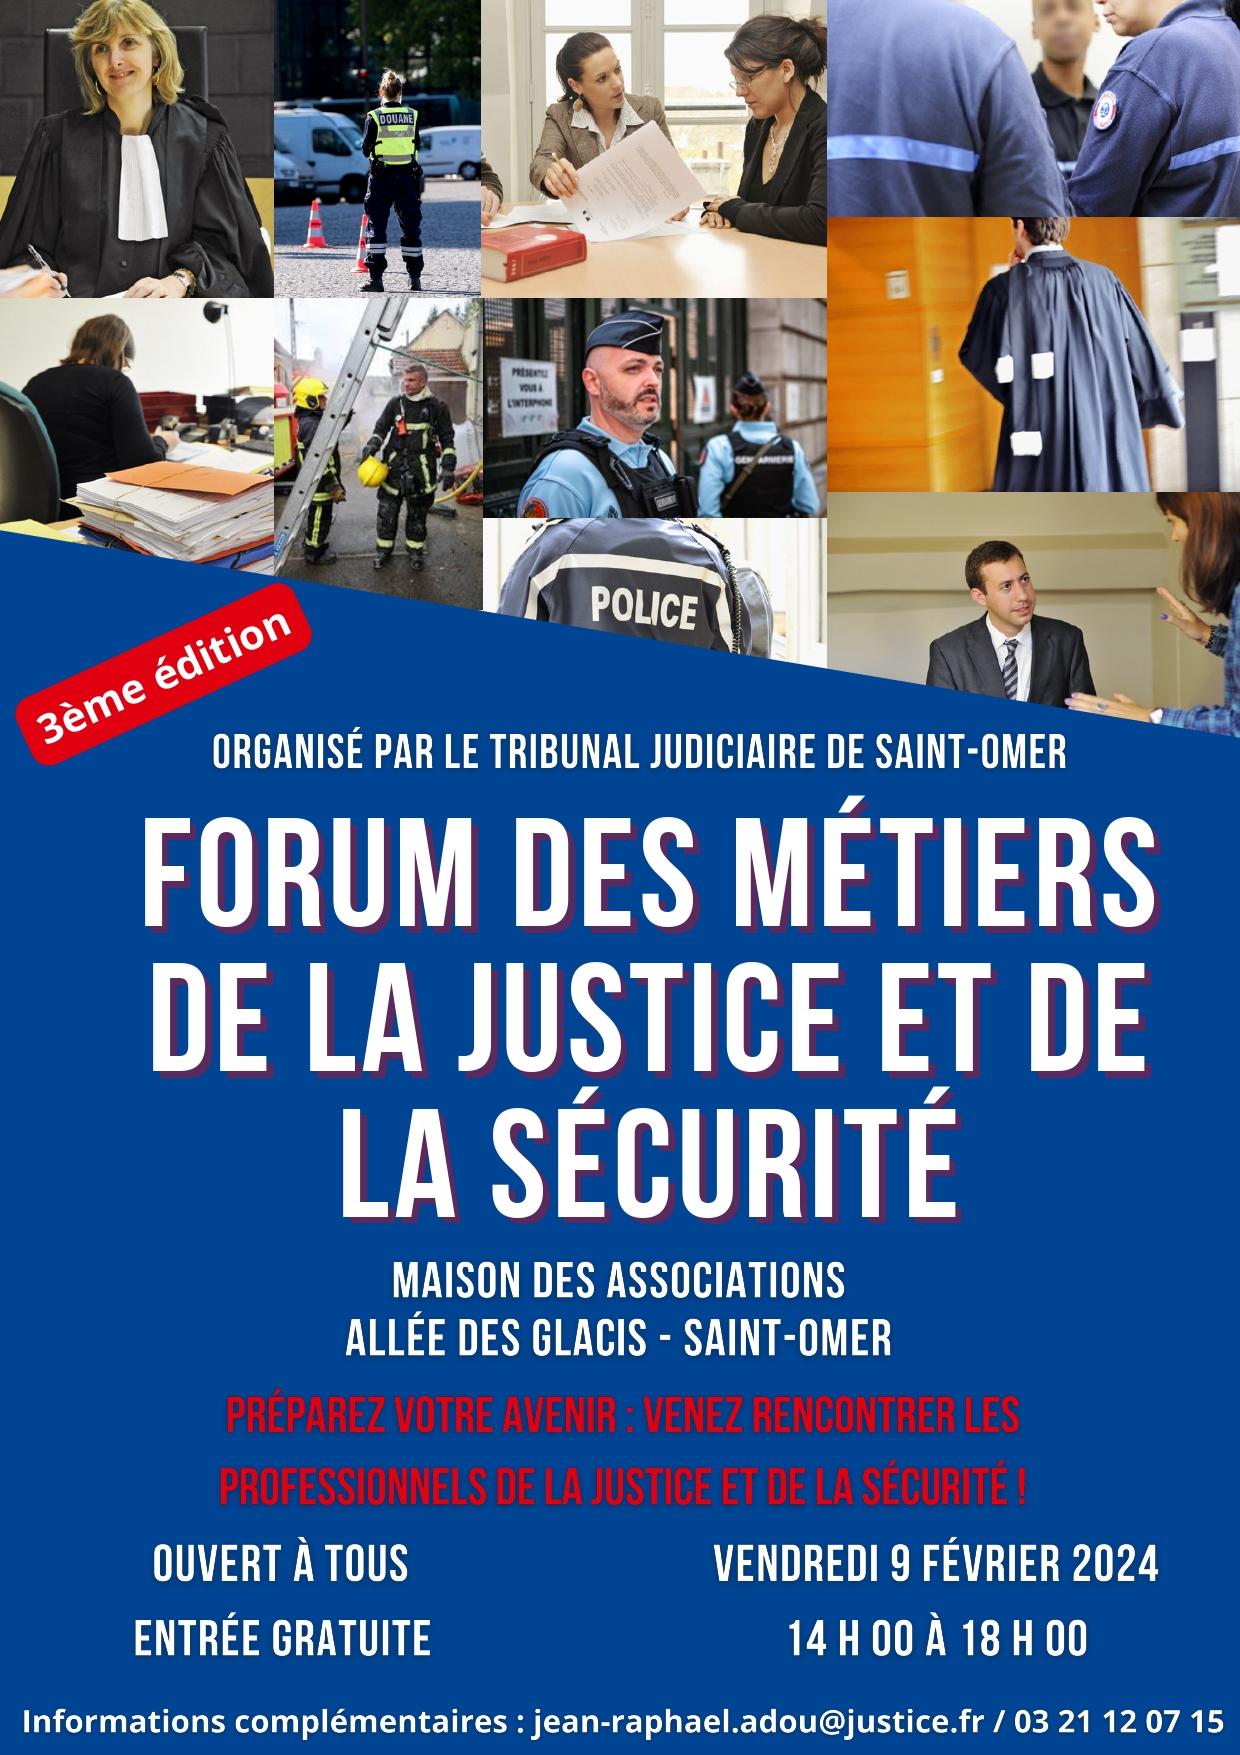 Invitation forum metiers justice securite 9 fevrier 2024 page 0001